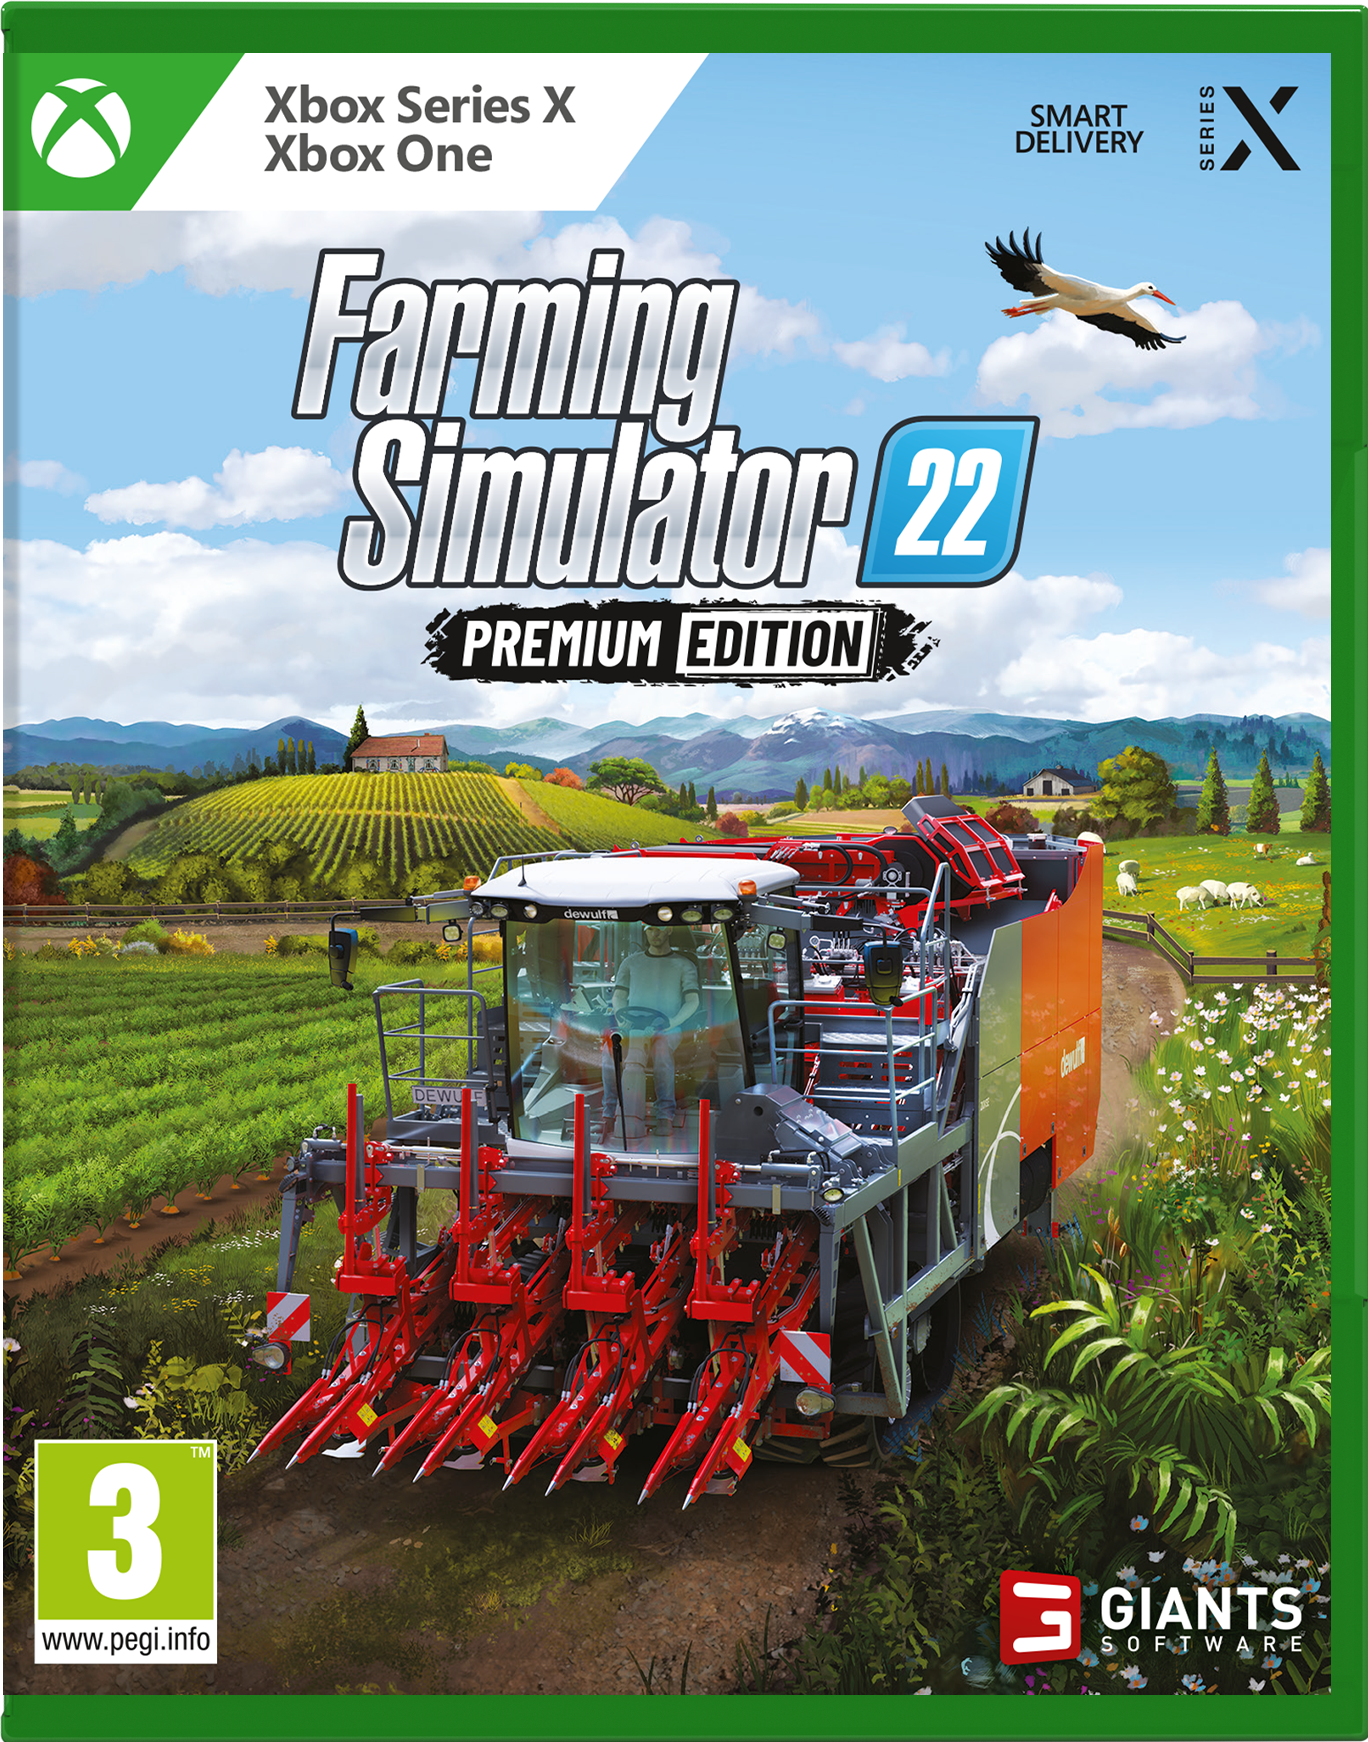 Giants Software, Farming Simulator 22 Premium Edition